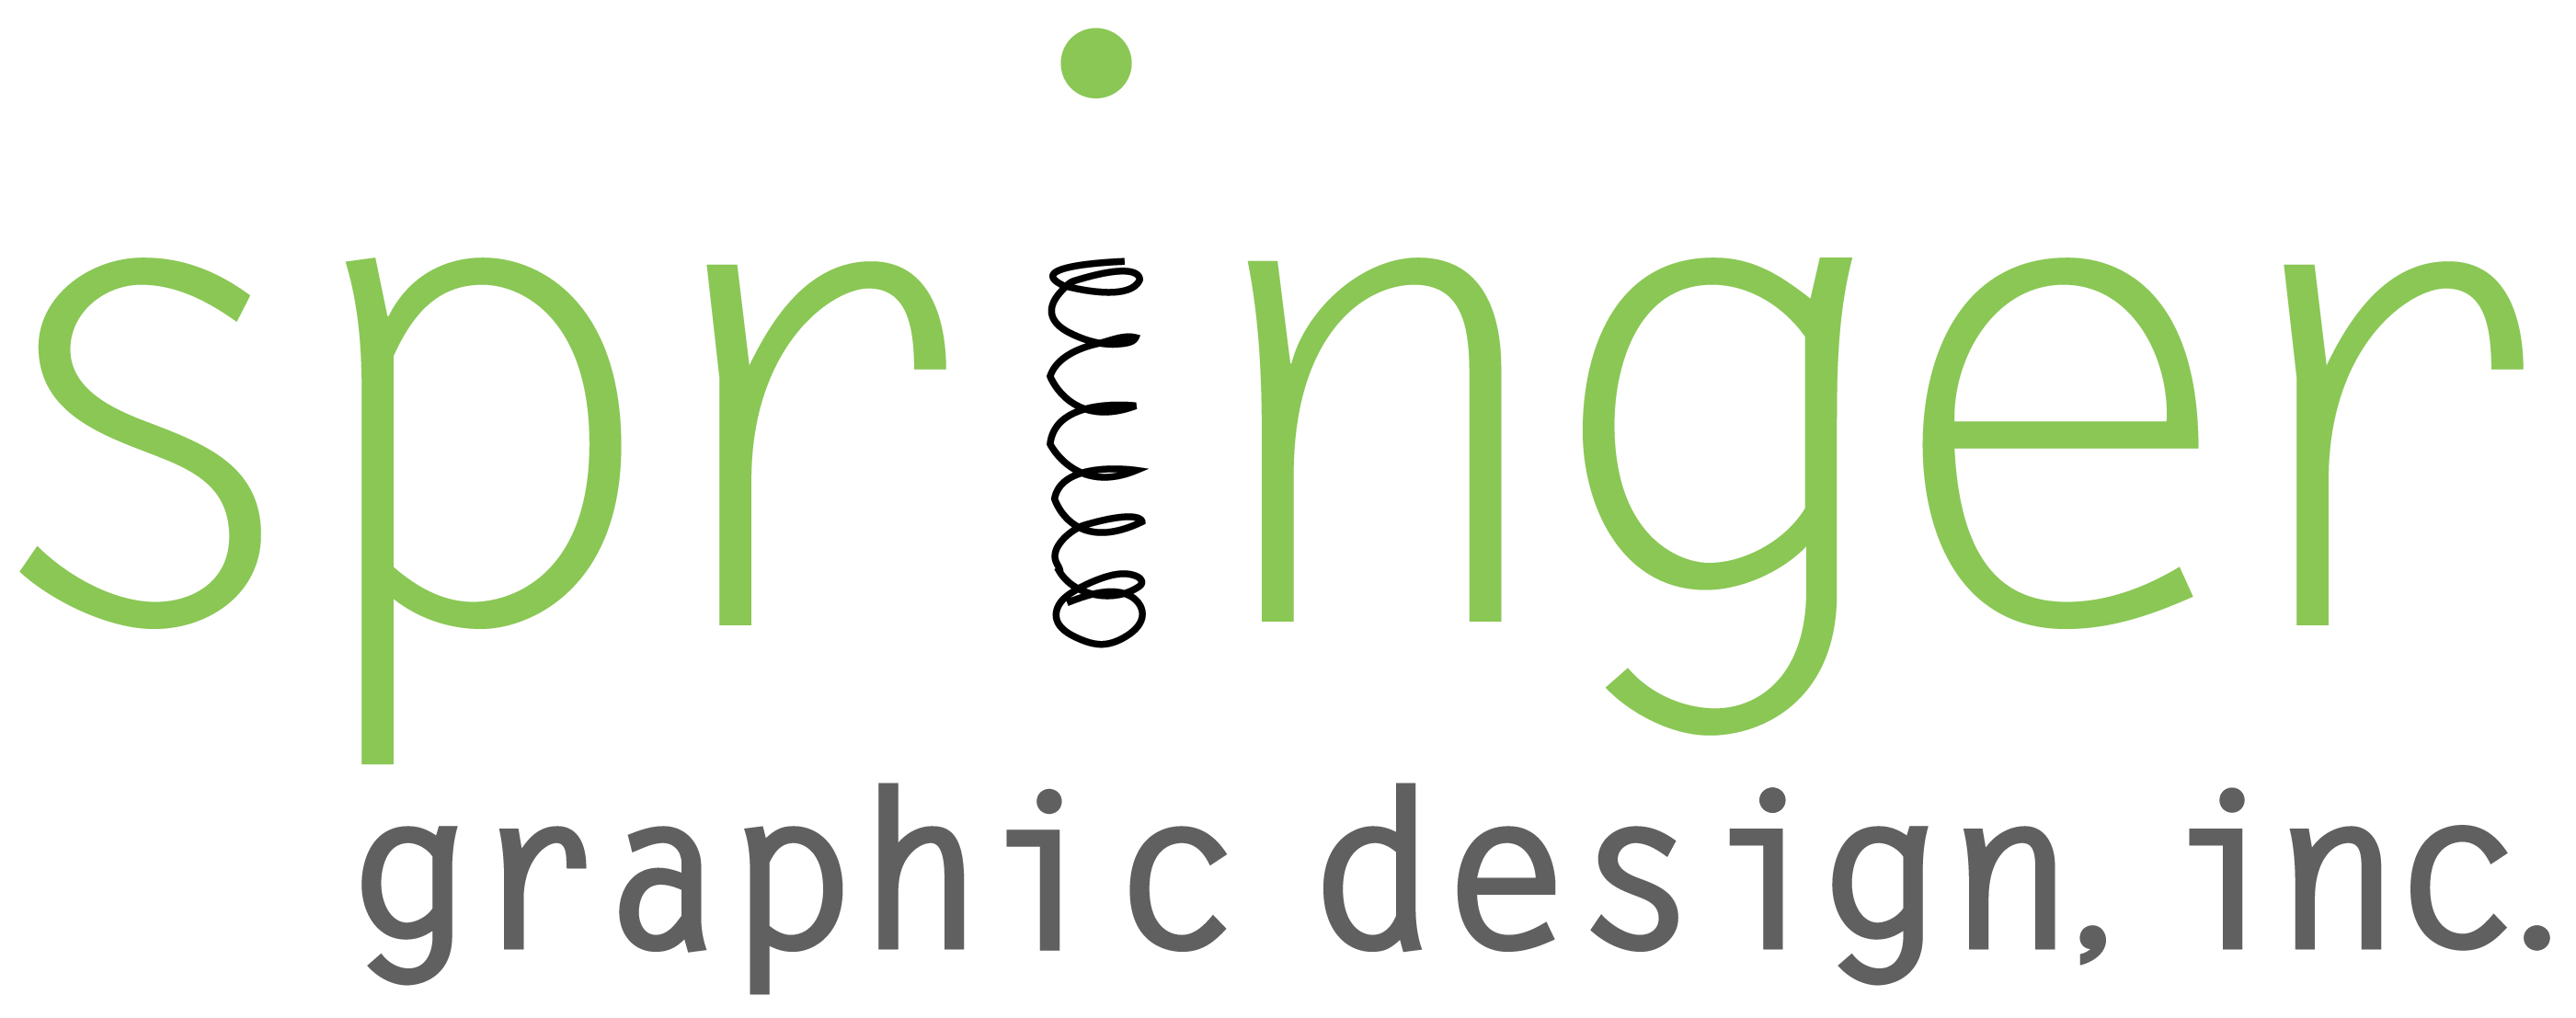 Springer Graphic Design Inc for web color